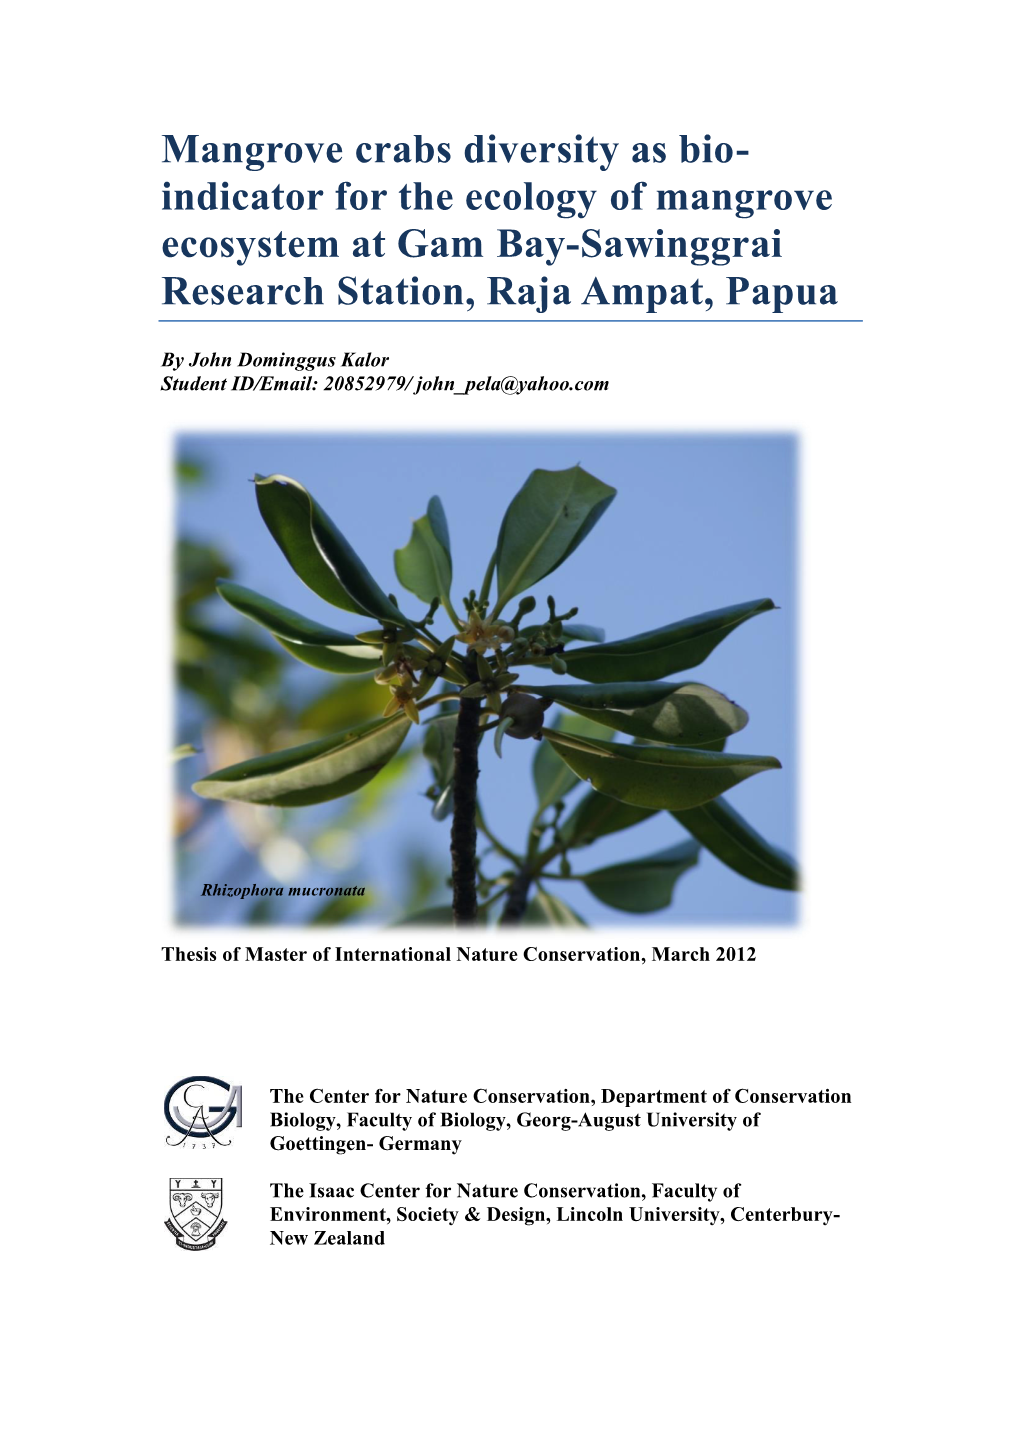 Indicator for the Ecology of Mangrove Ecosystem at Gam Bay-Sawinggrai Research Station, Raja Ampat, Papua